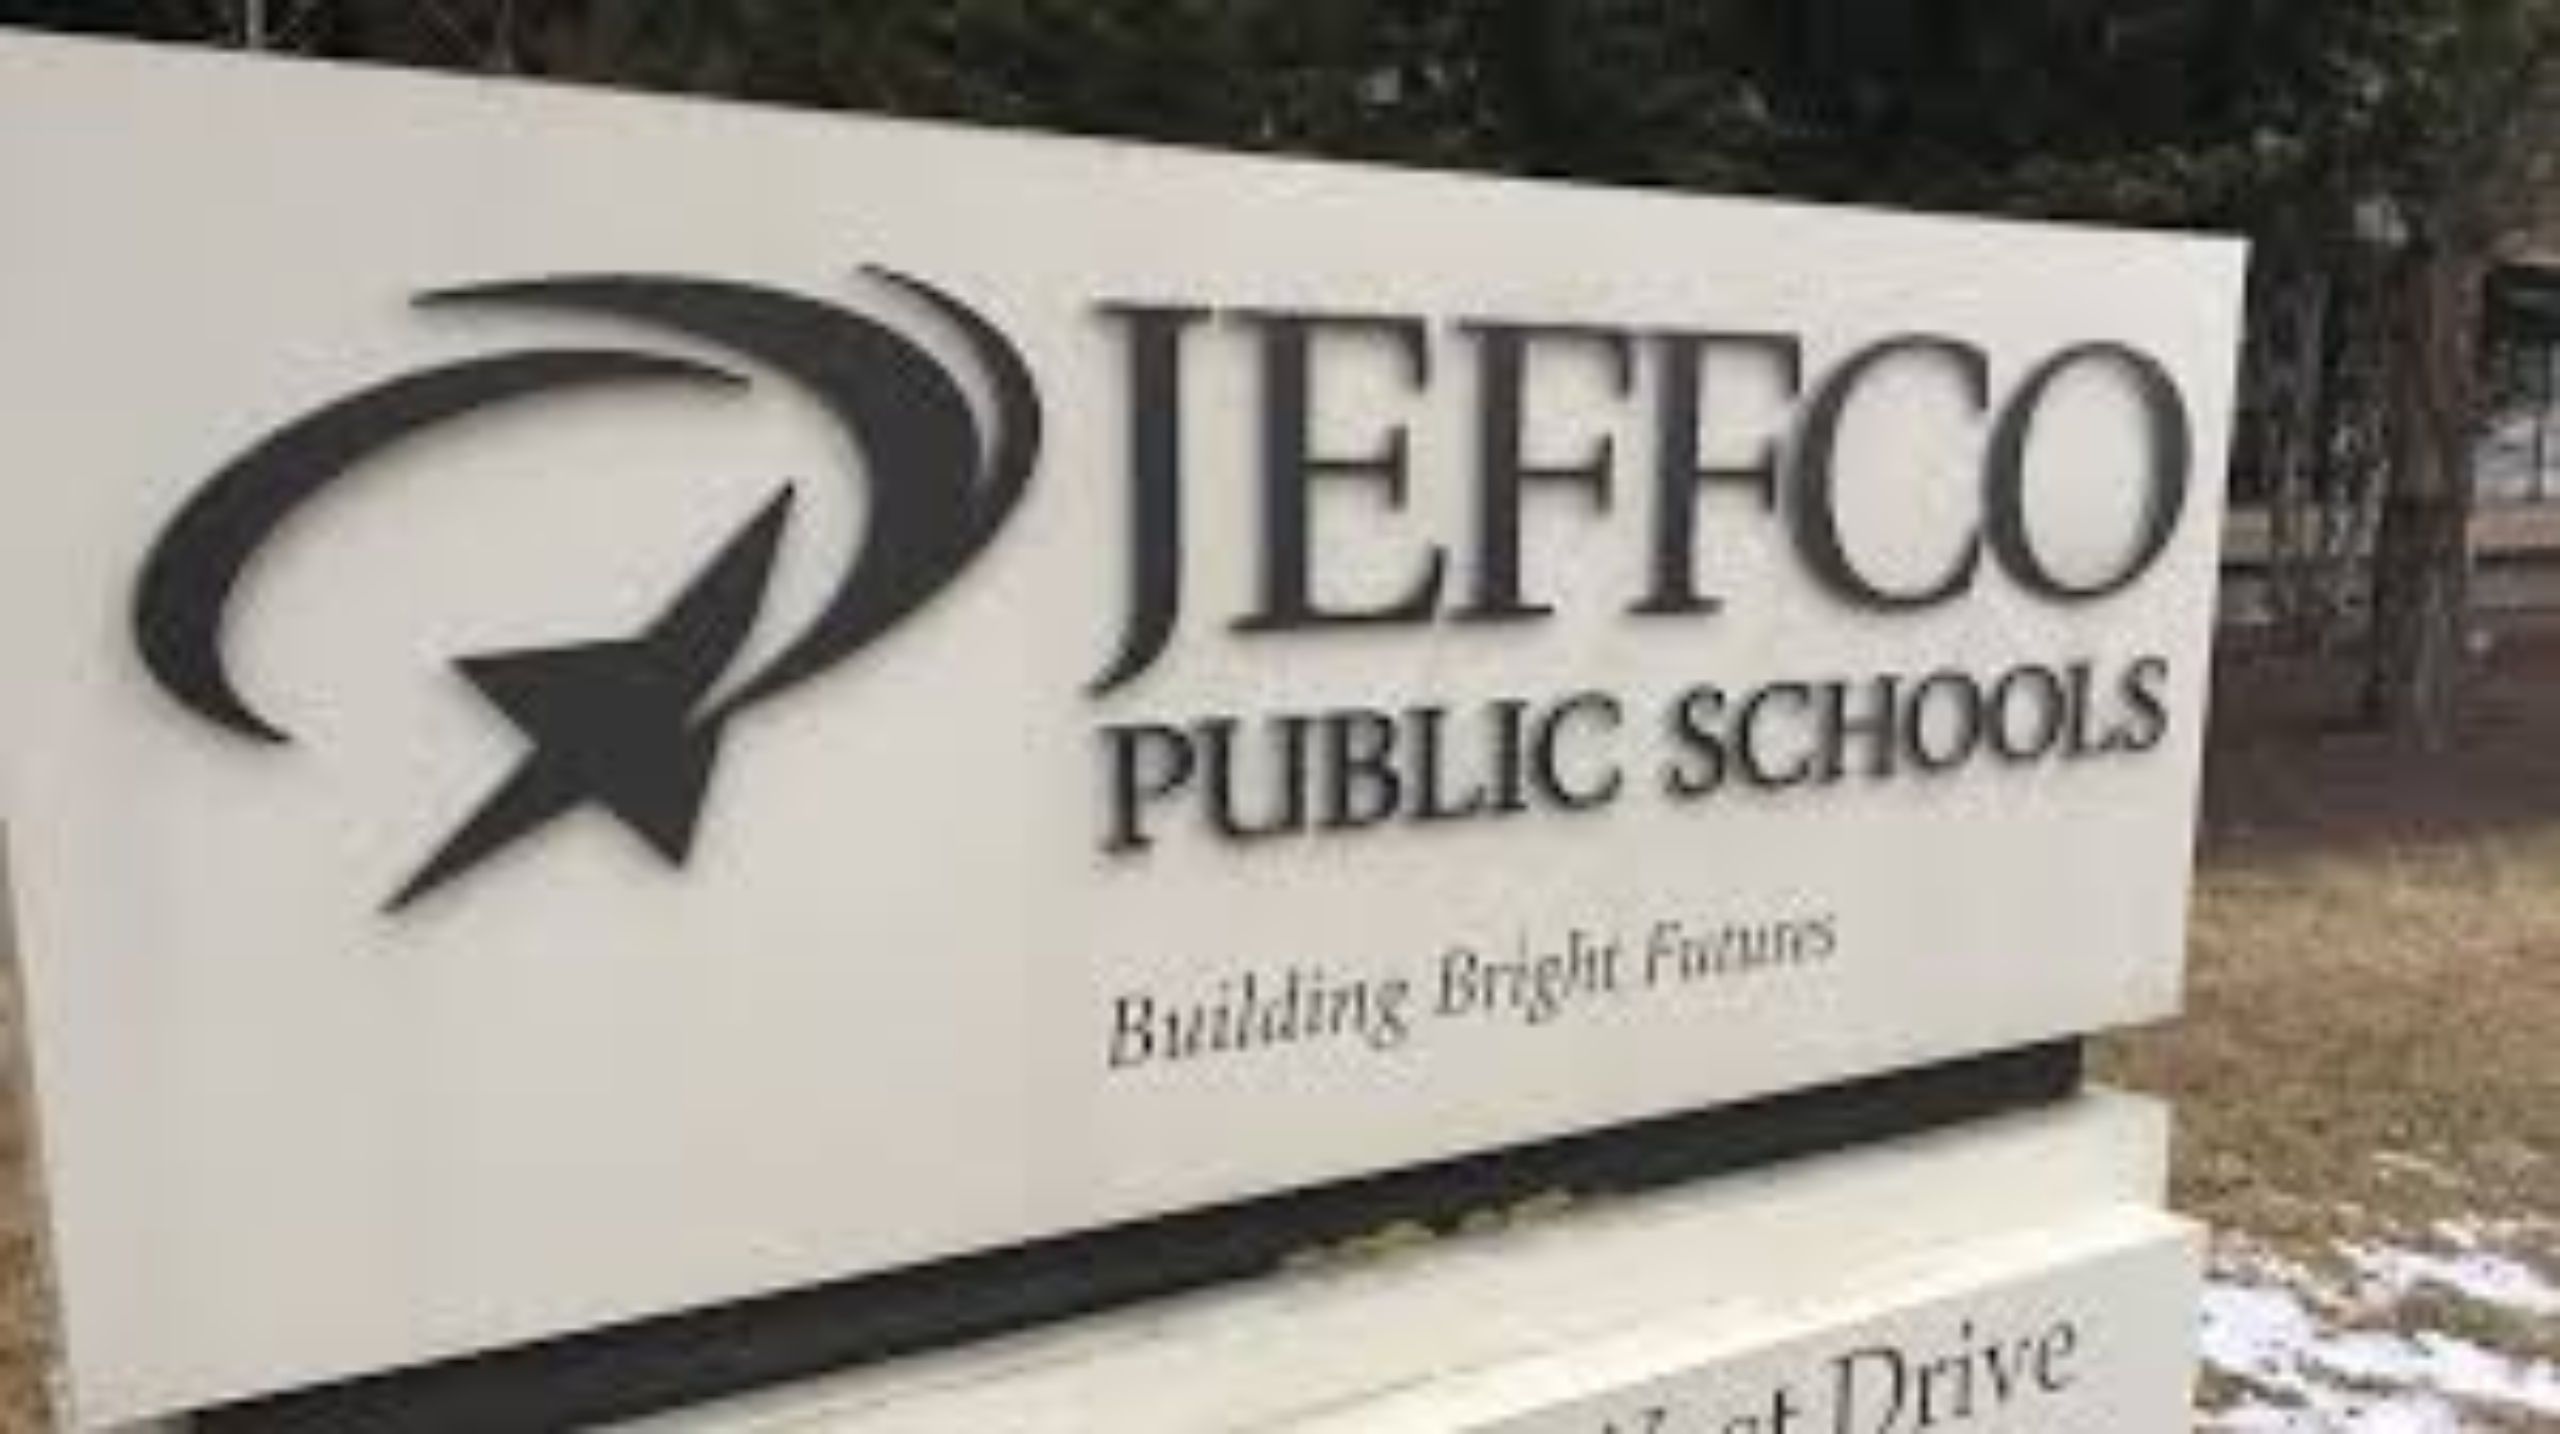 Physical Activity - Jeffco Public Schools